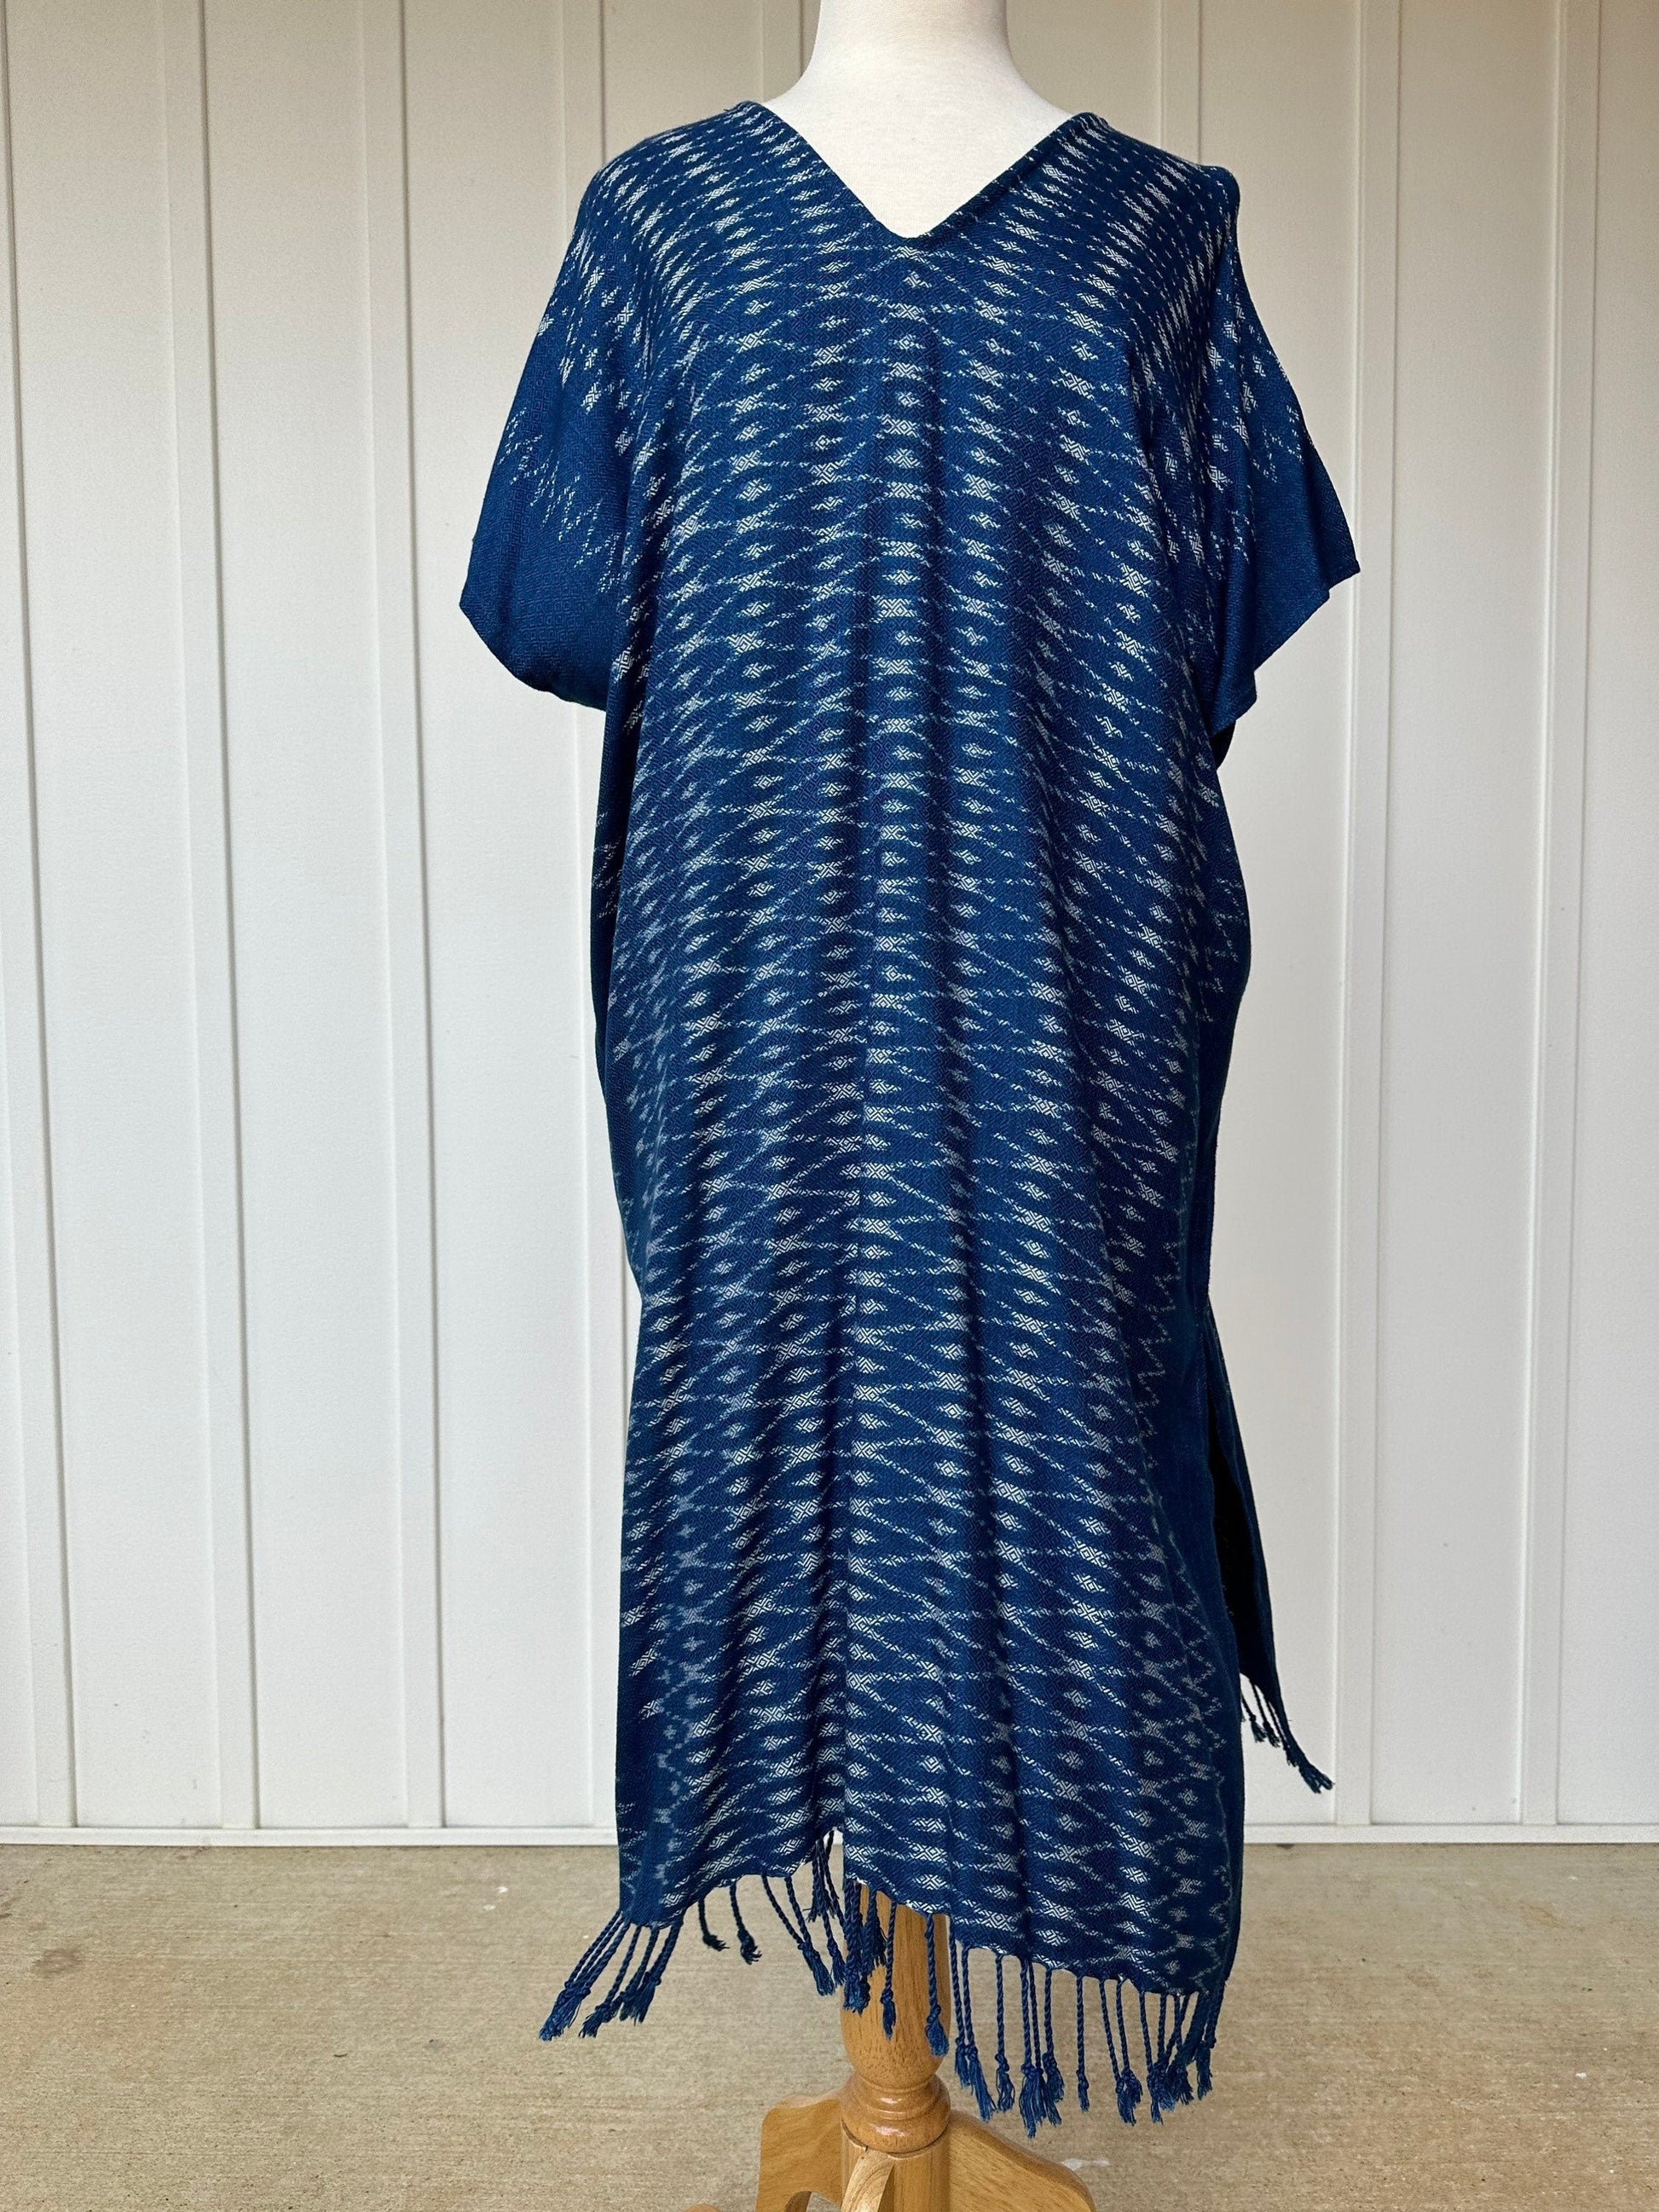 MALA handworks  Ikat Hand Woven Pattern Kaftan in Indigo Blue with White and Organic Dye